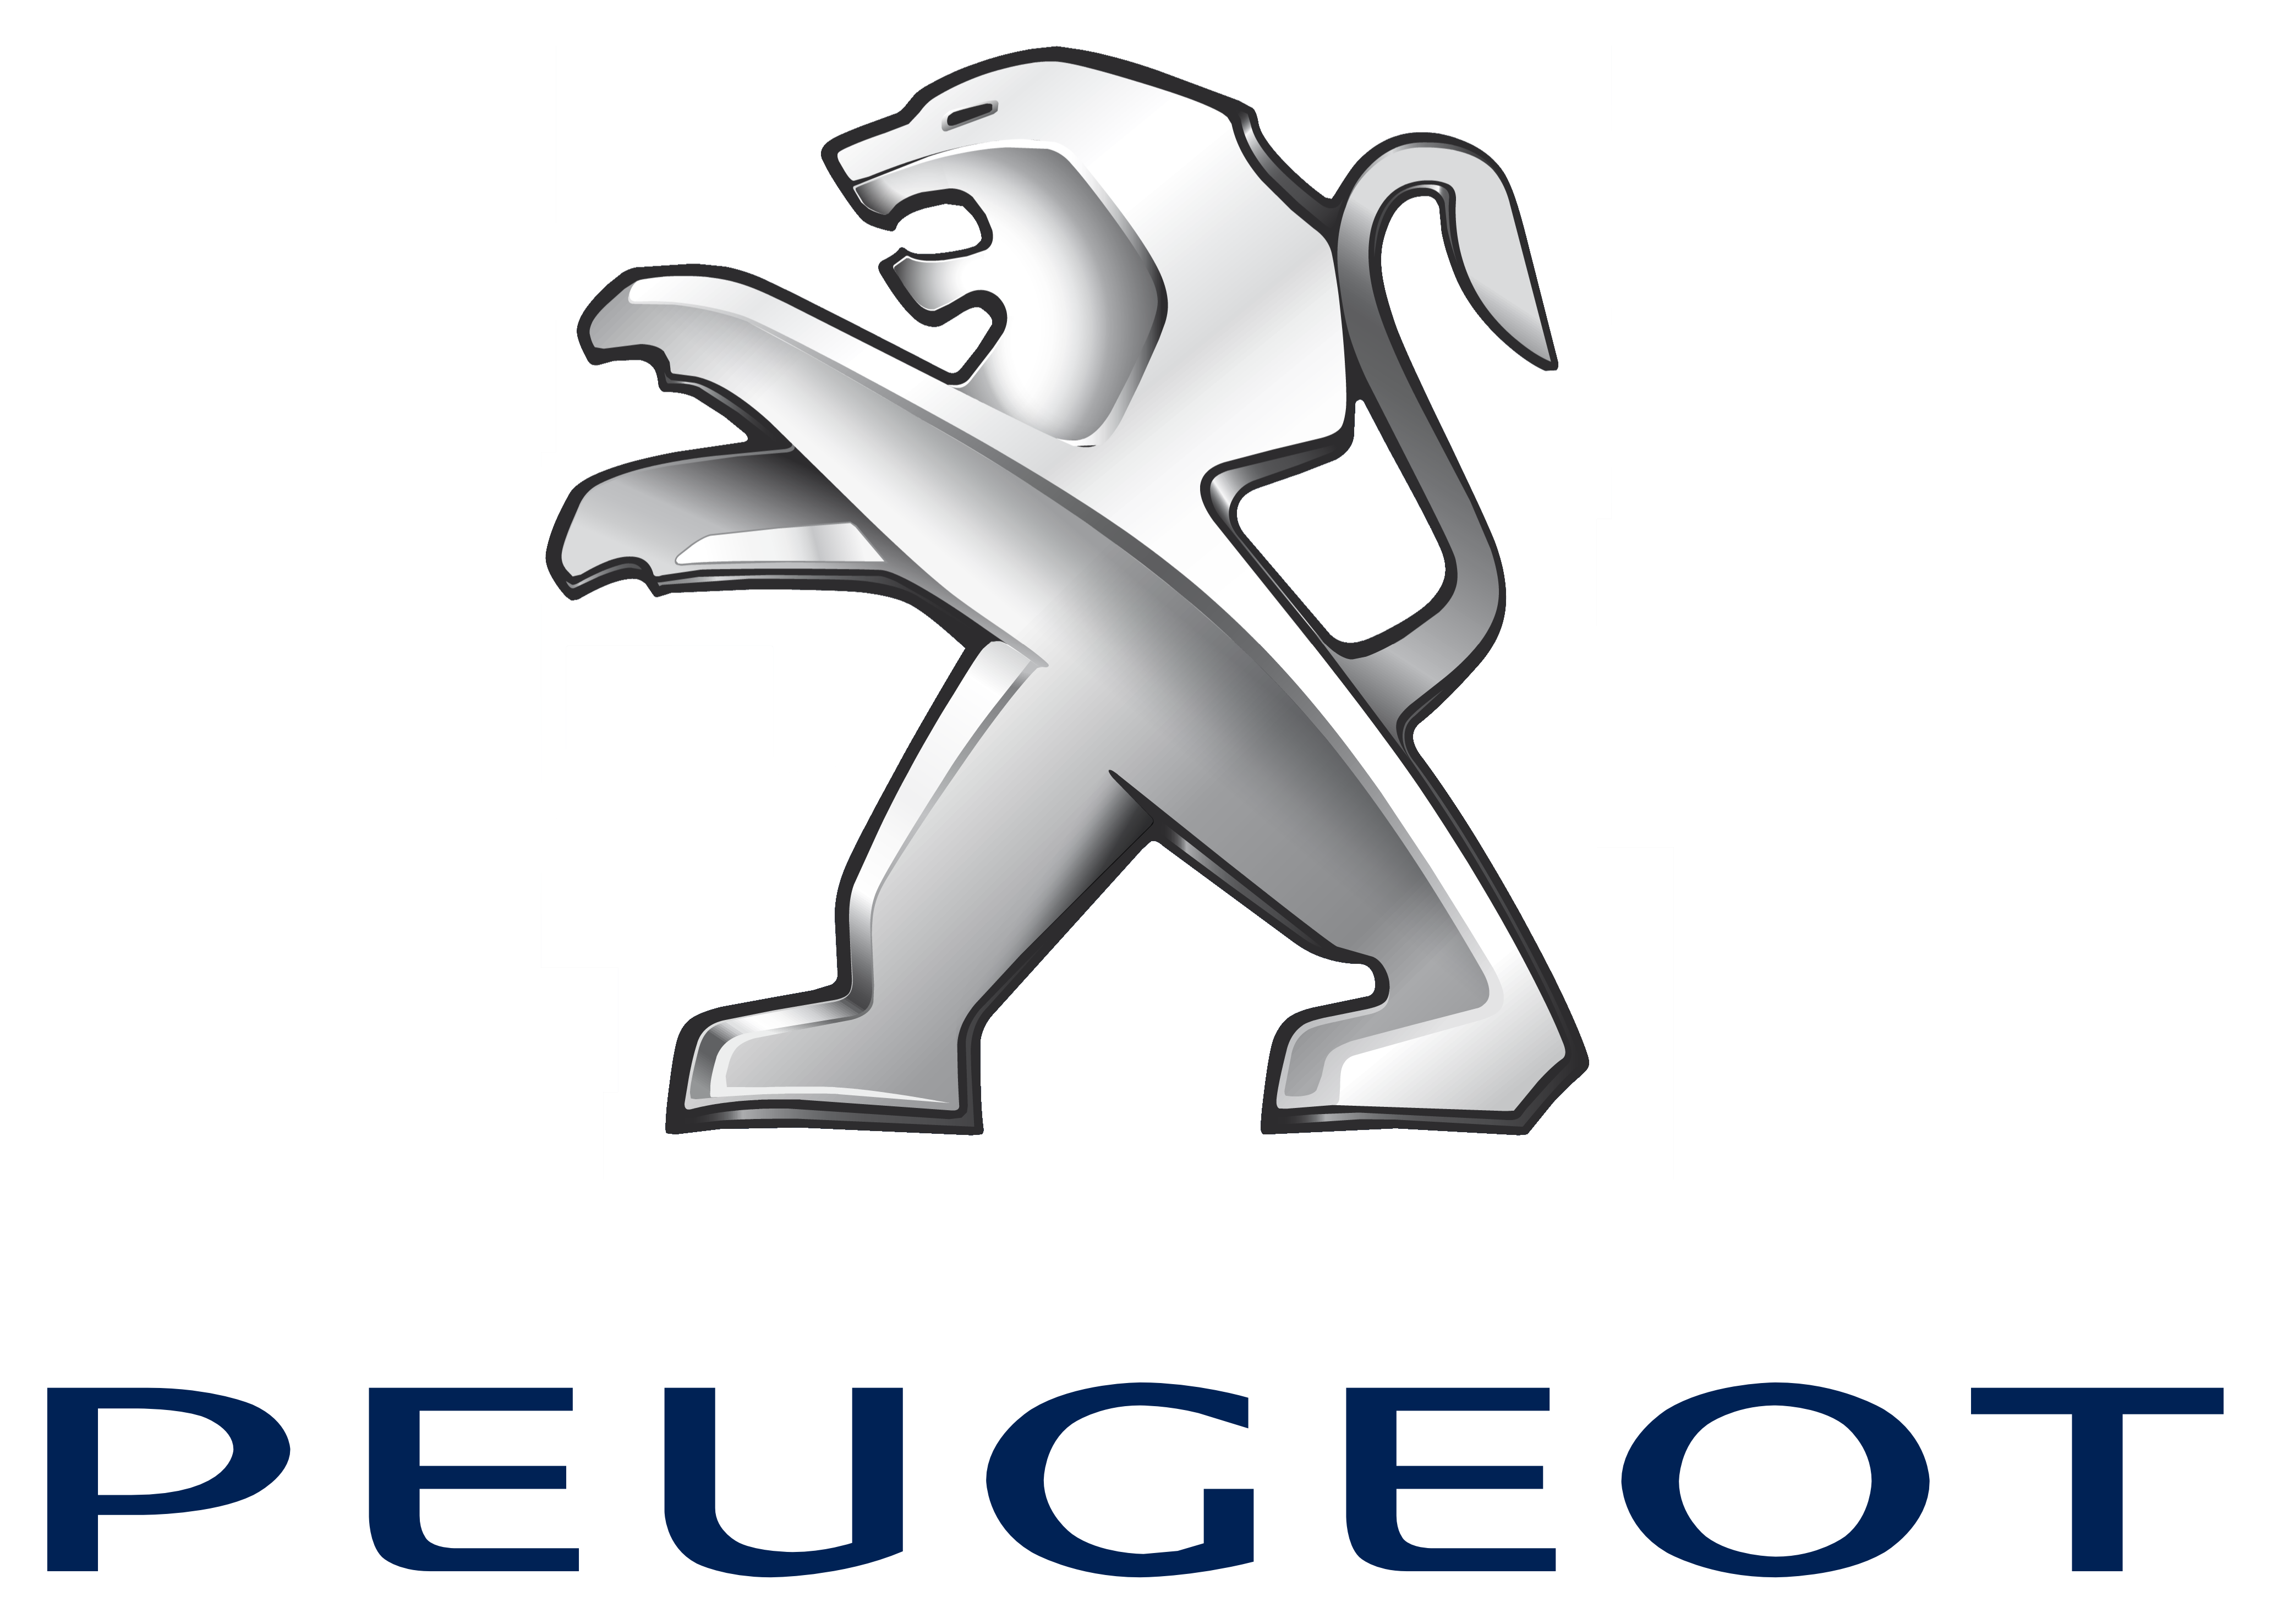 Peugeot Logo PNG - 178087